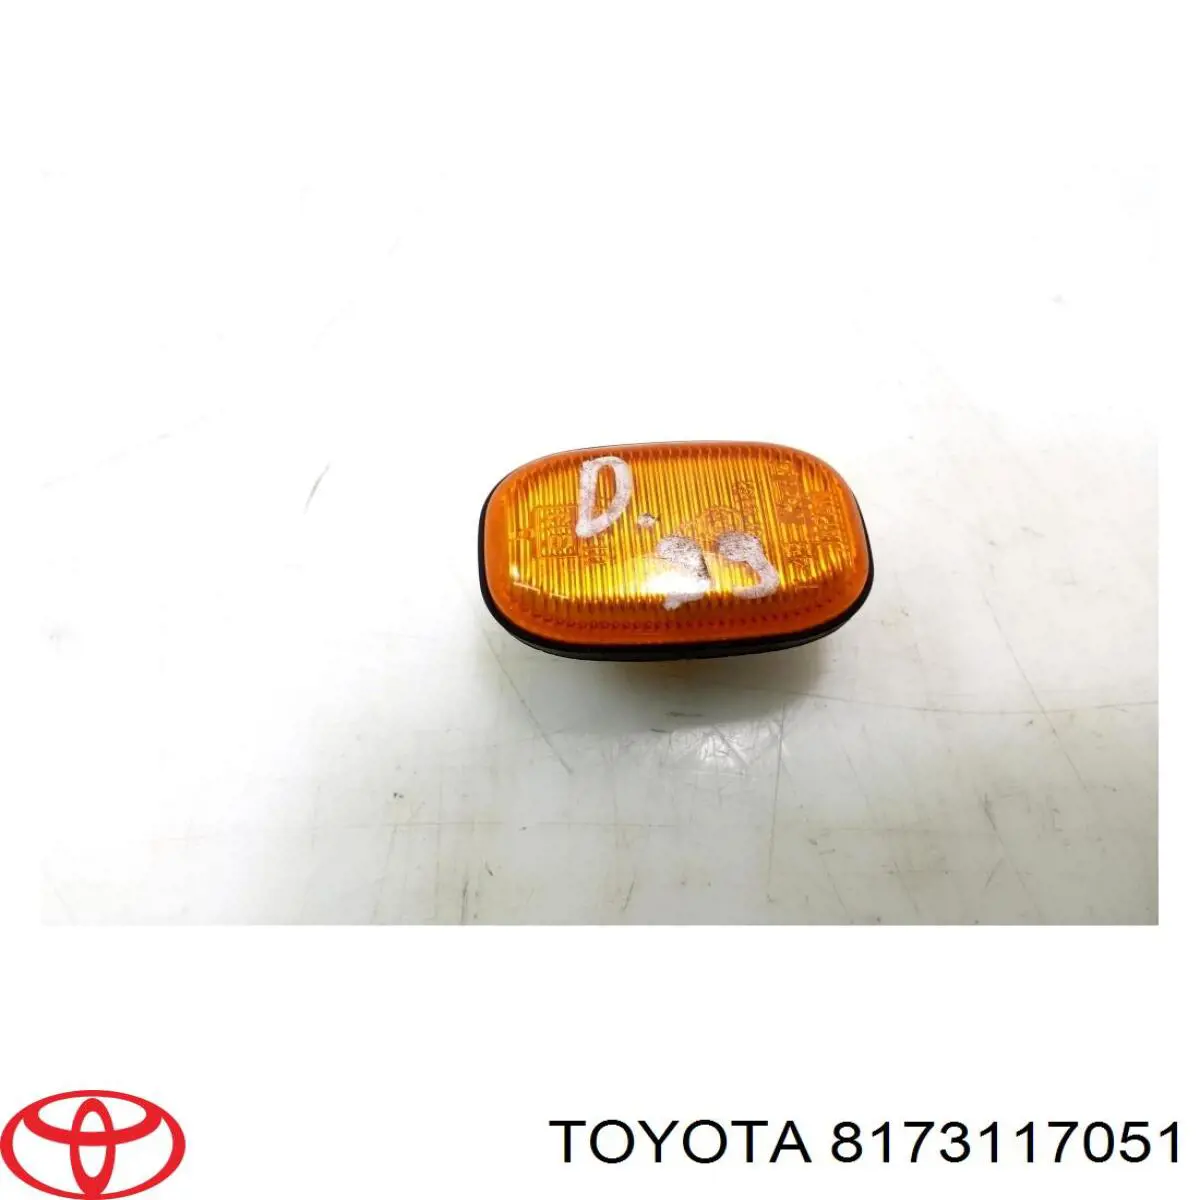 8173117051 Toyota luz intermitente guardabarros